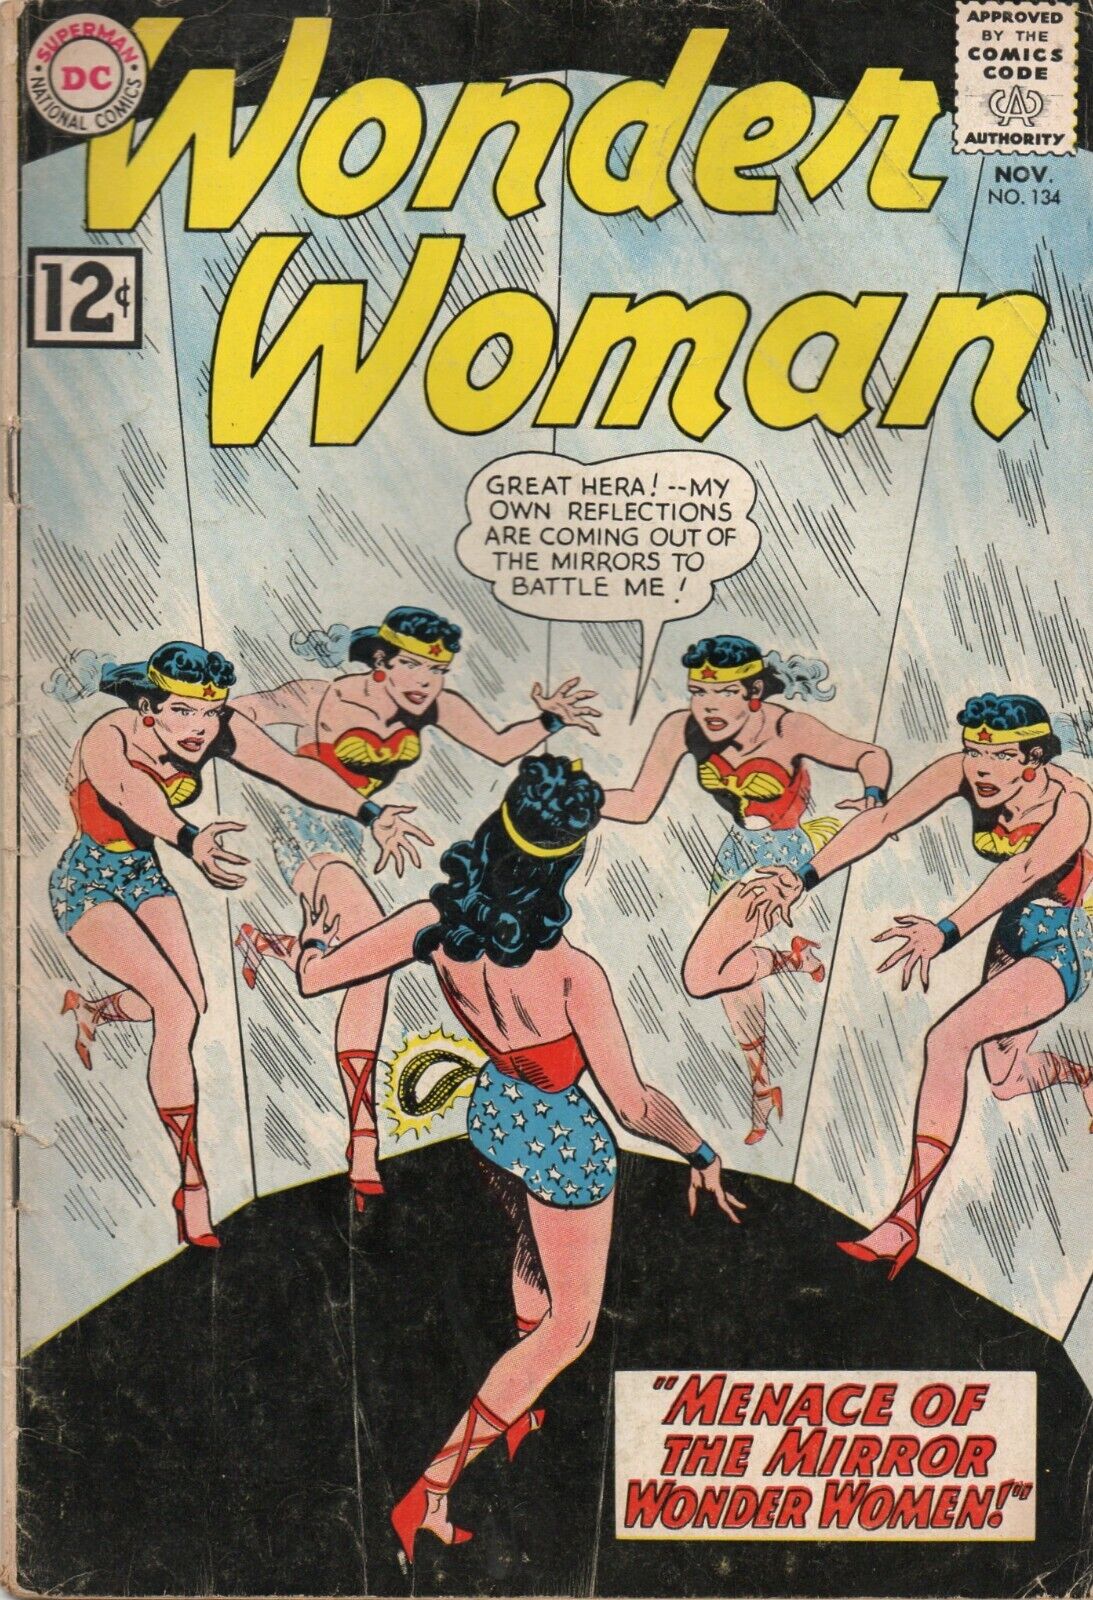 Wonder Woman #134 - Silver Age - low grade